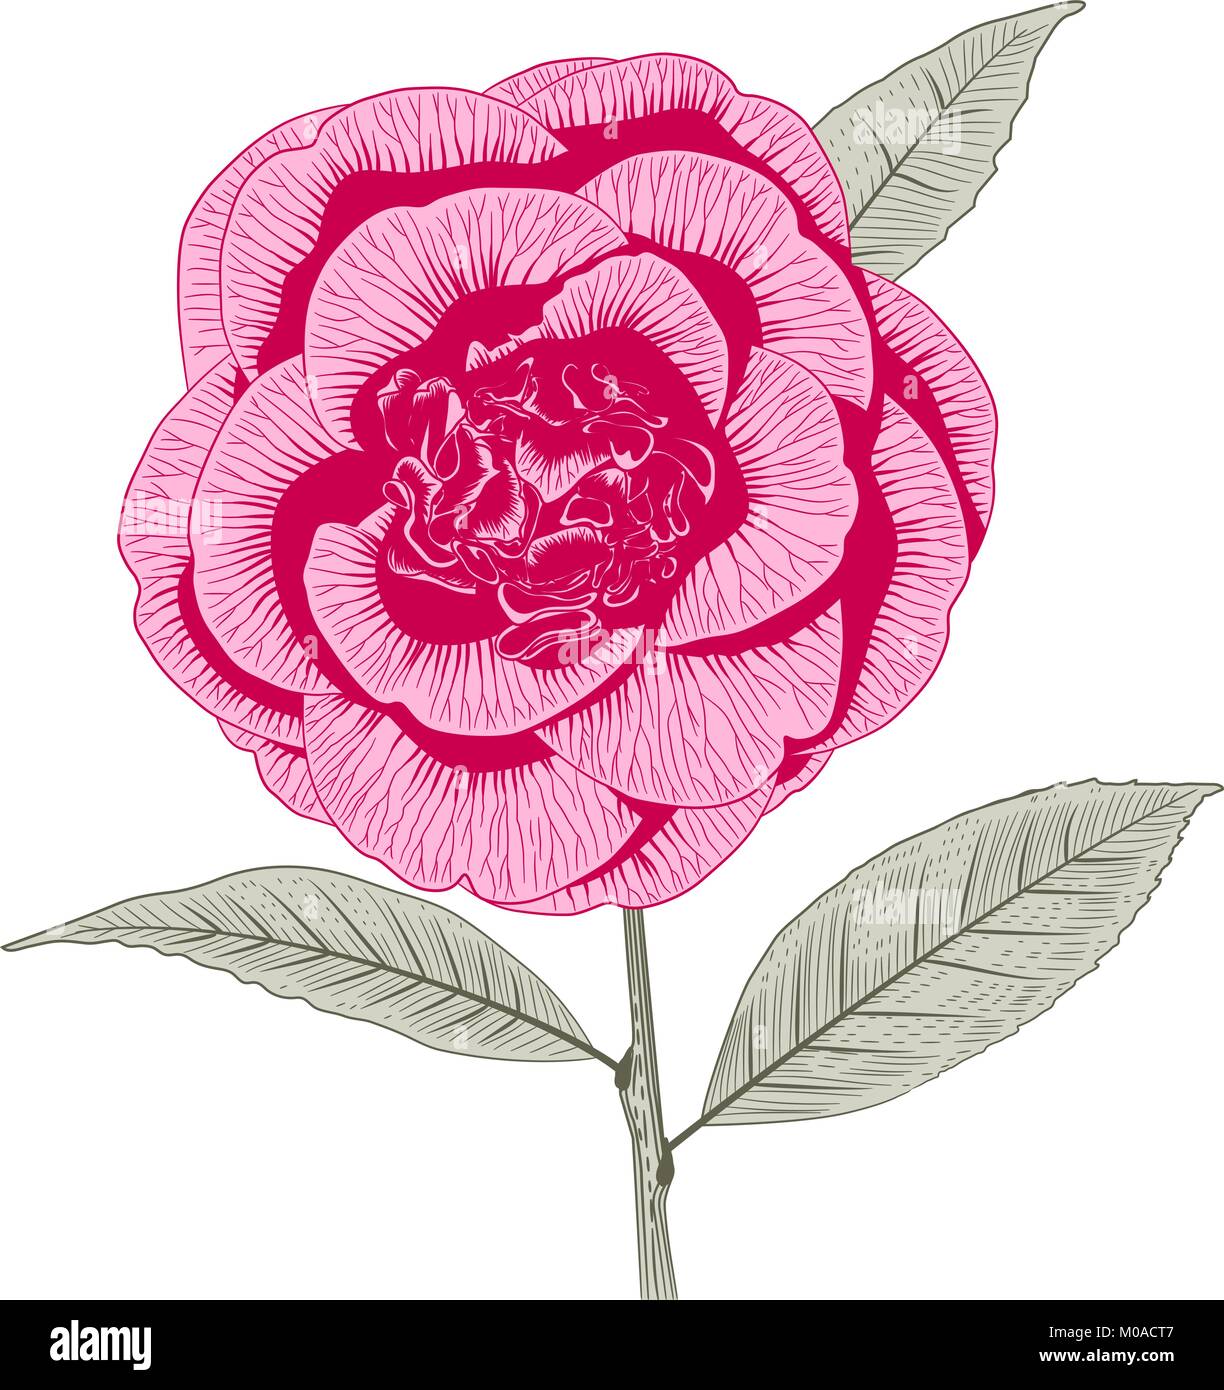 Leuchtend rosa Camellia japonica Pfingstrose form Blume mit Blättern Hand gezeichnet Vector Illustration Stock Vektor